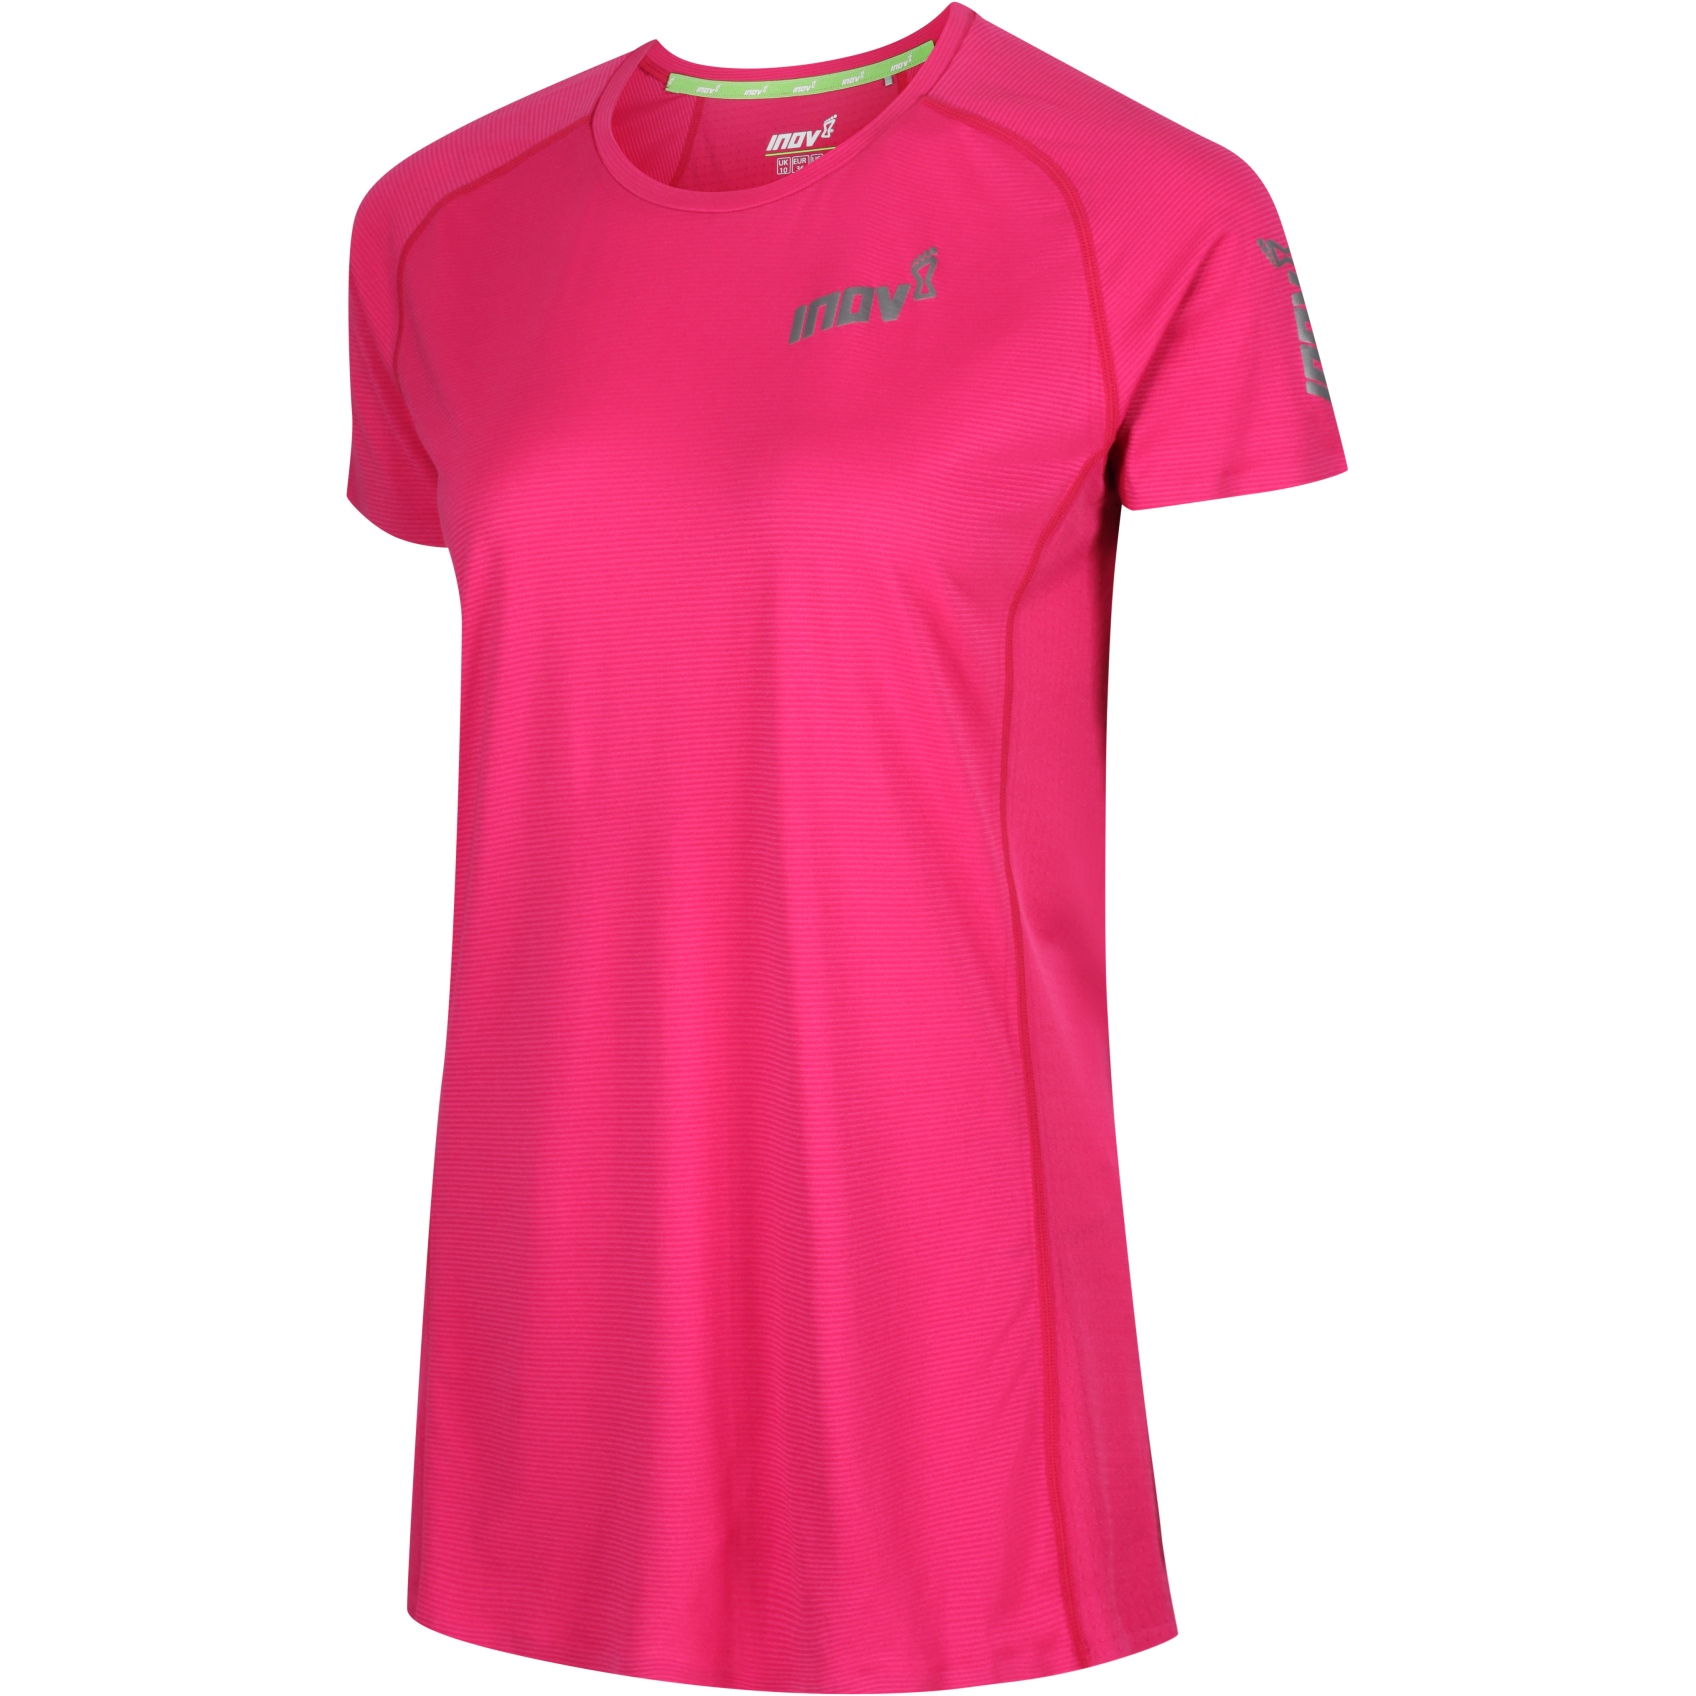 Foto de Inov-8 Base Elite Camiseta Running Mujer - rosa